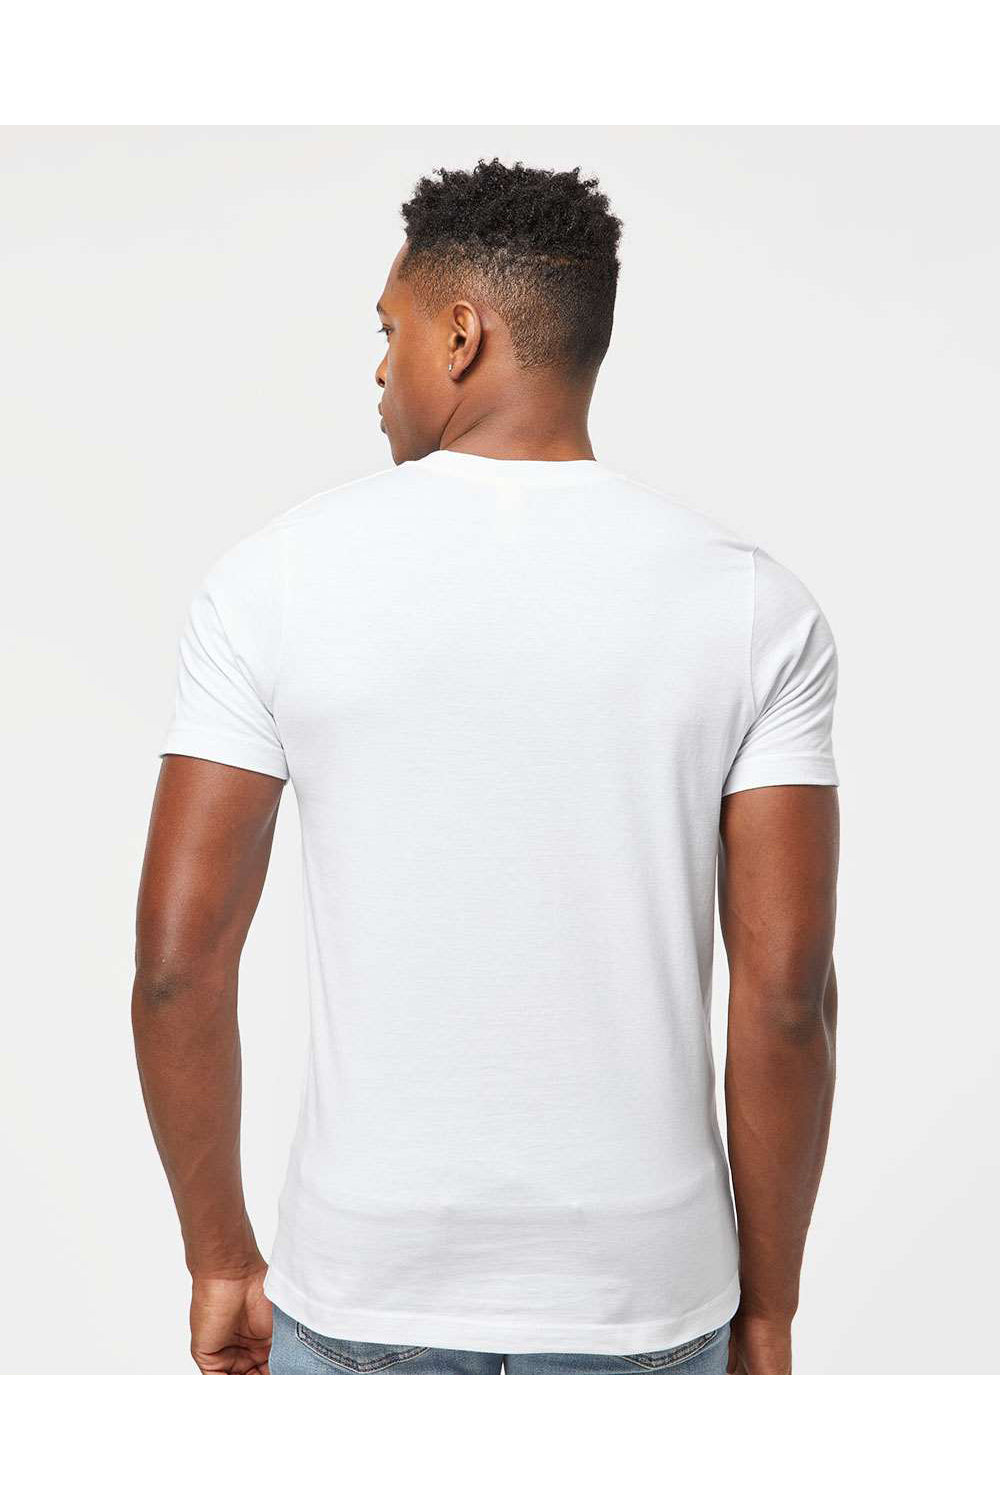 Tultex 502 Mens Premium Short Sleeve Crewneck T-Shirt White Model Back